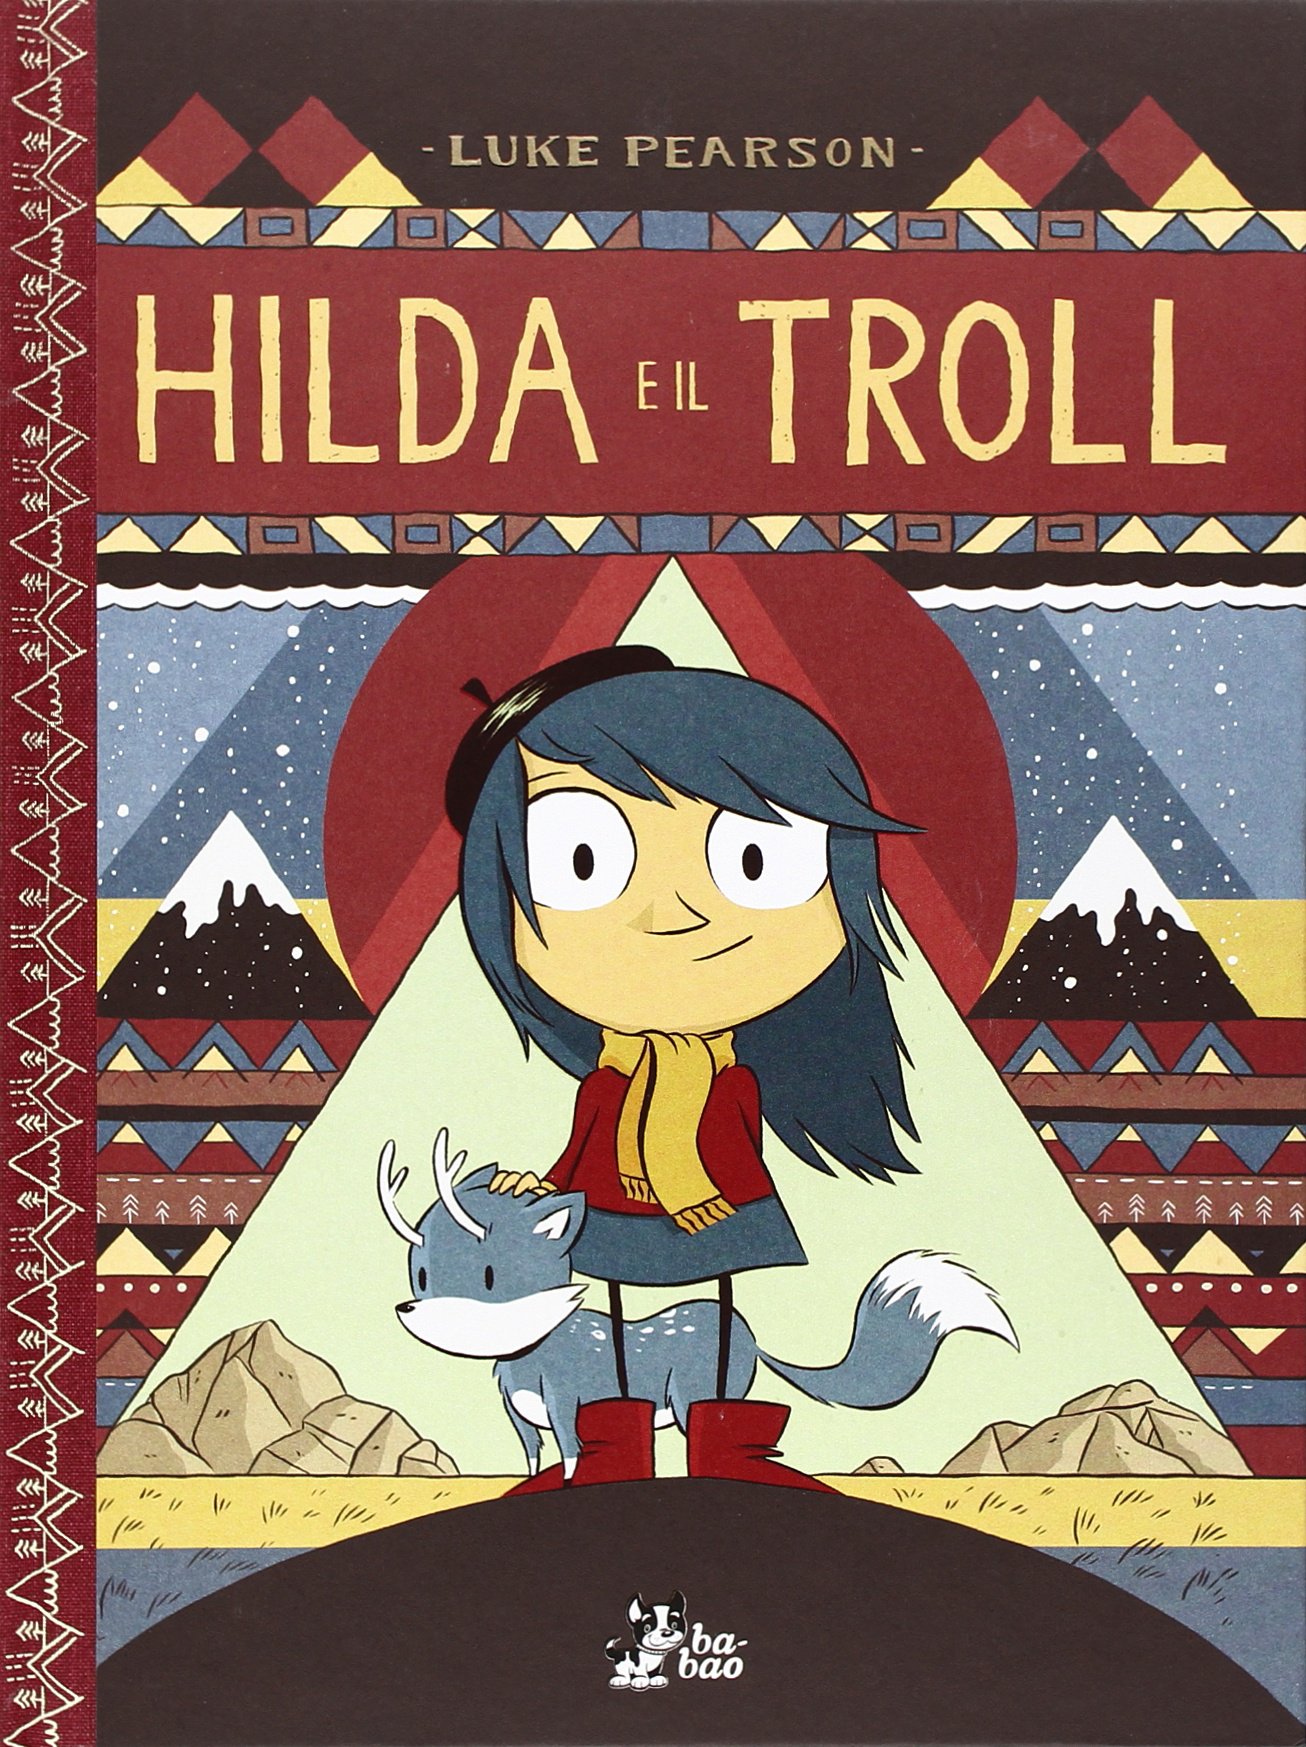 Cómic "Hilda"